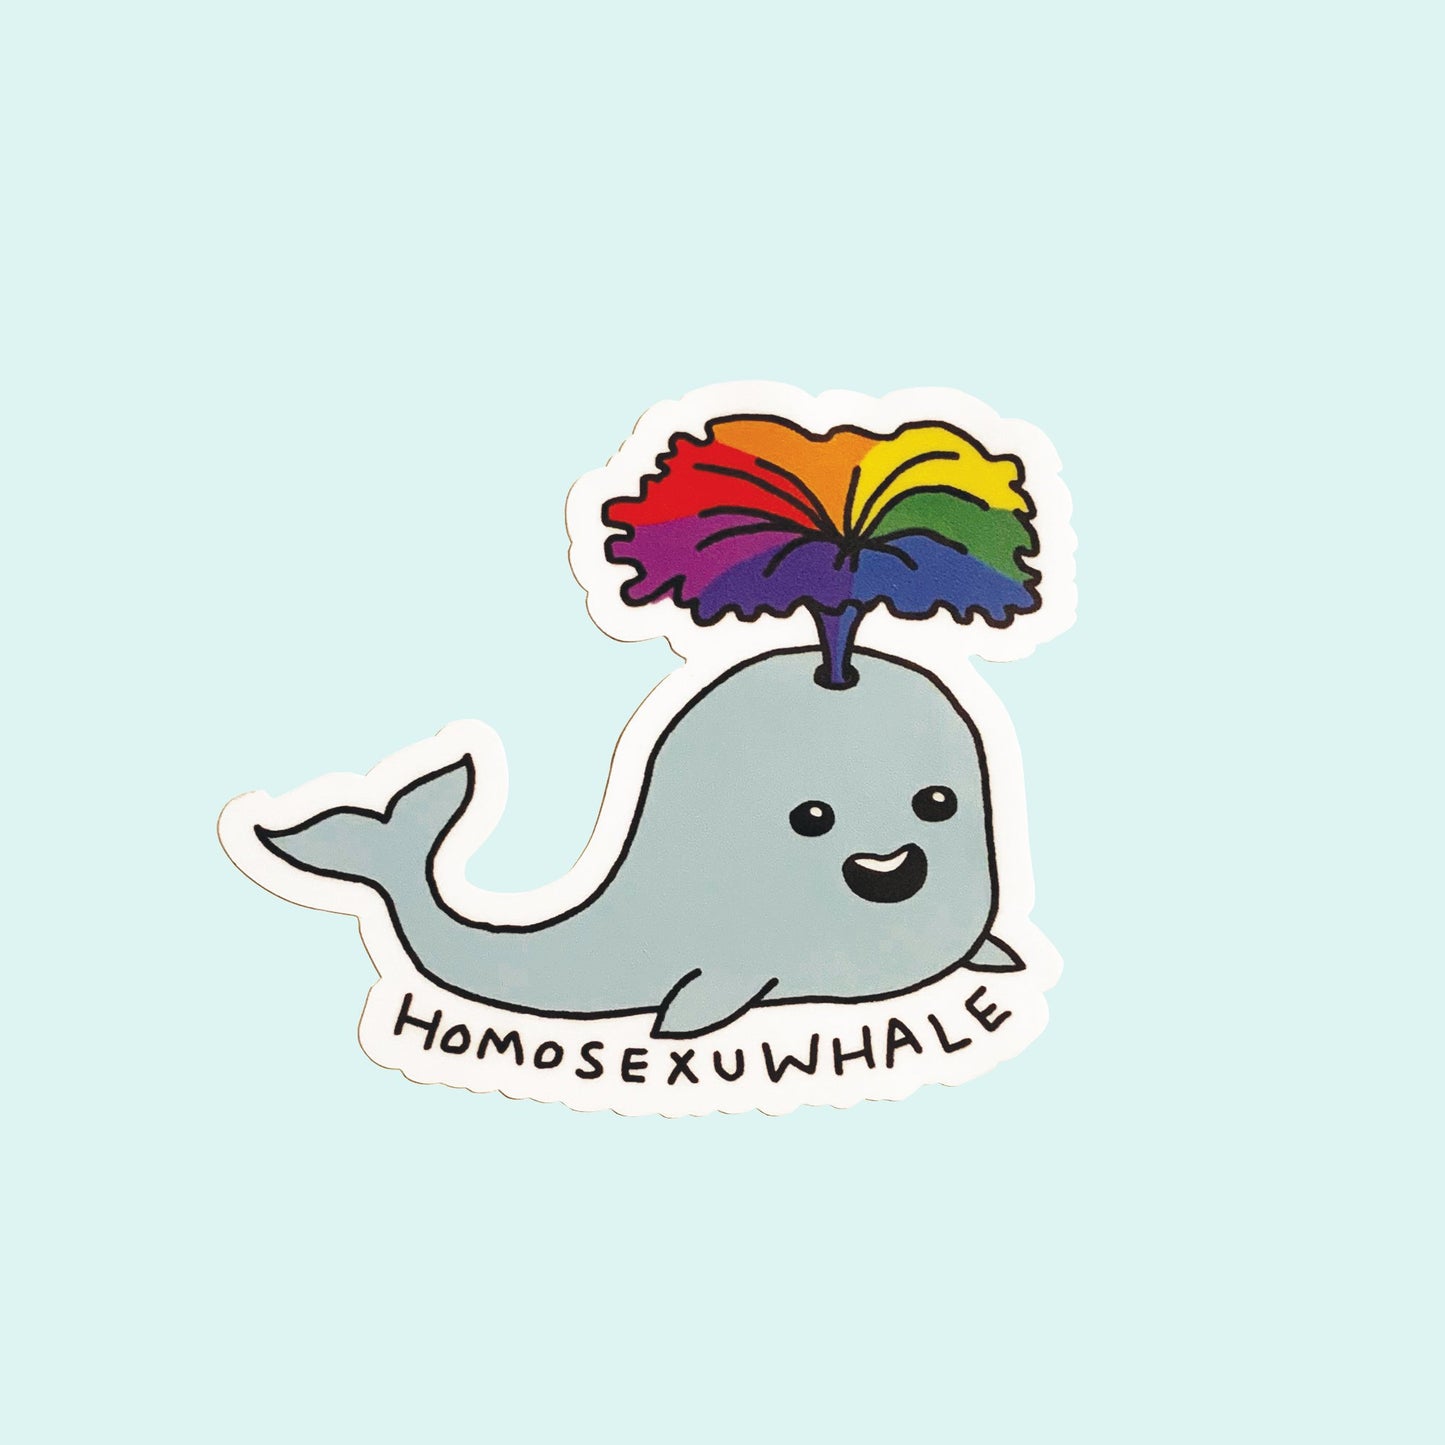 Punny Homosexu-Whale Vinyl Sticker | Gay Pride | LGBTQ | Laptop Sticker